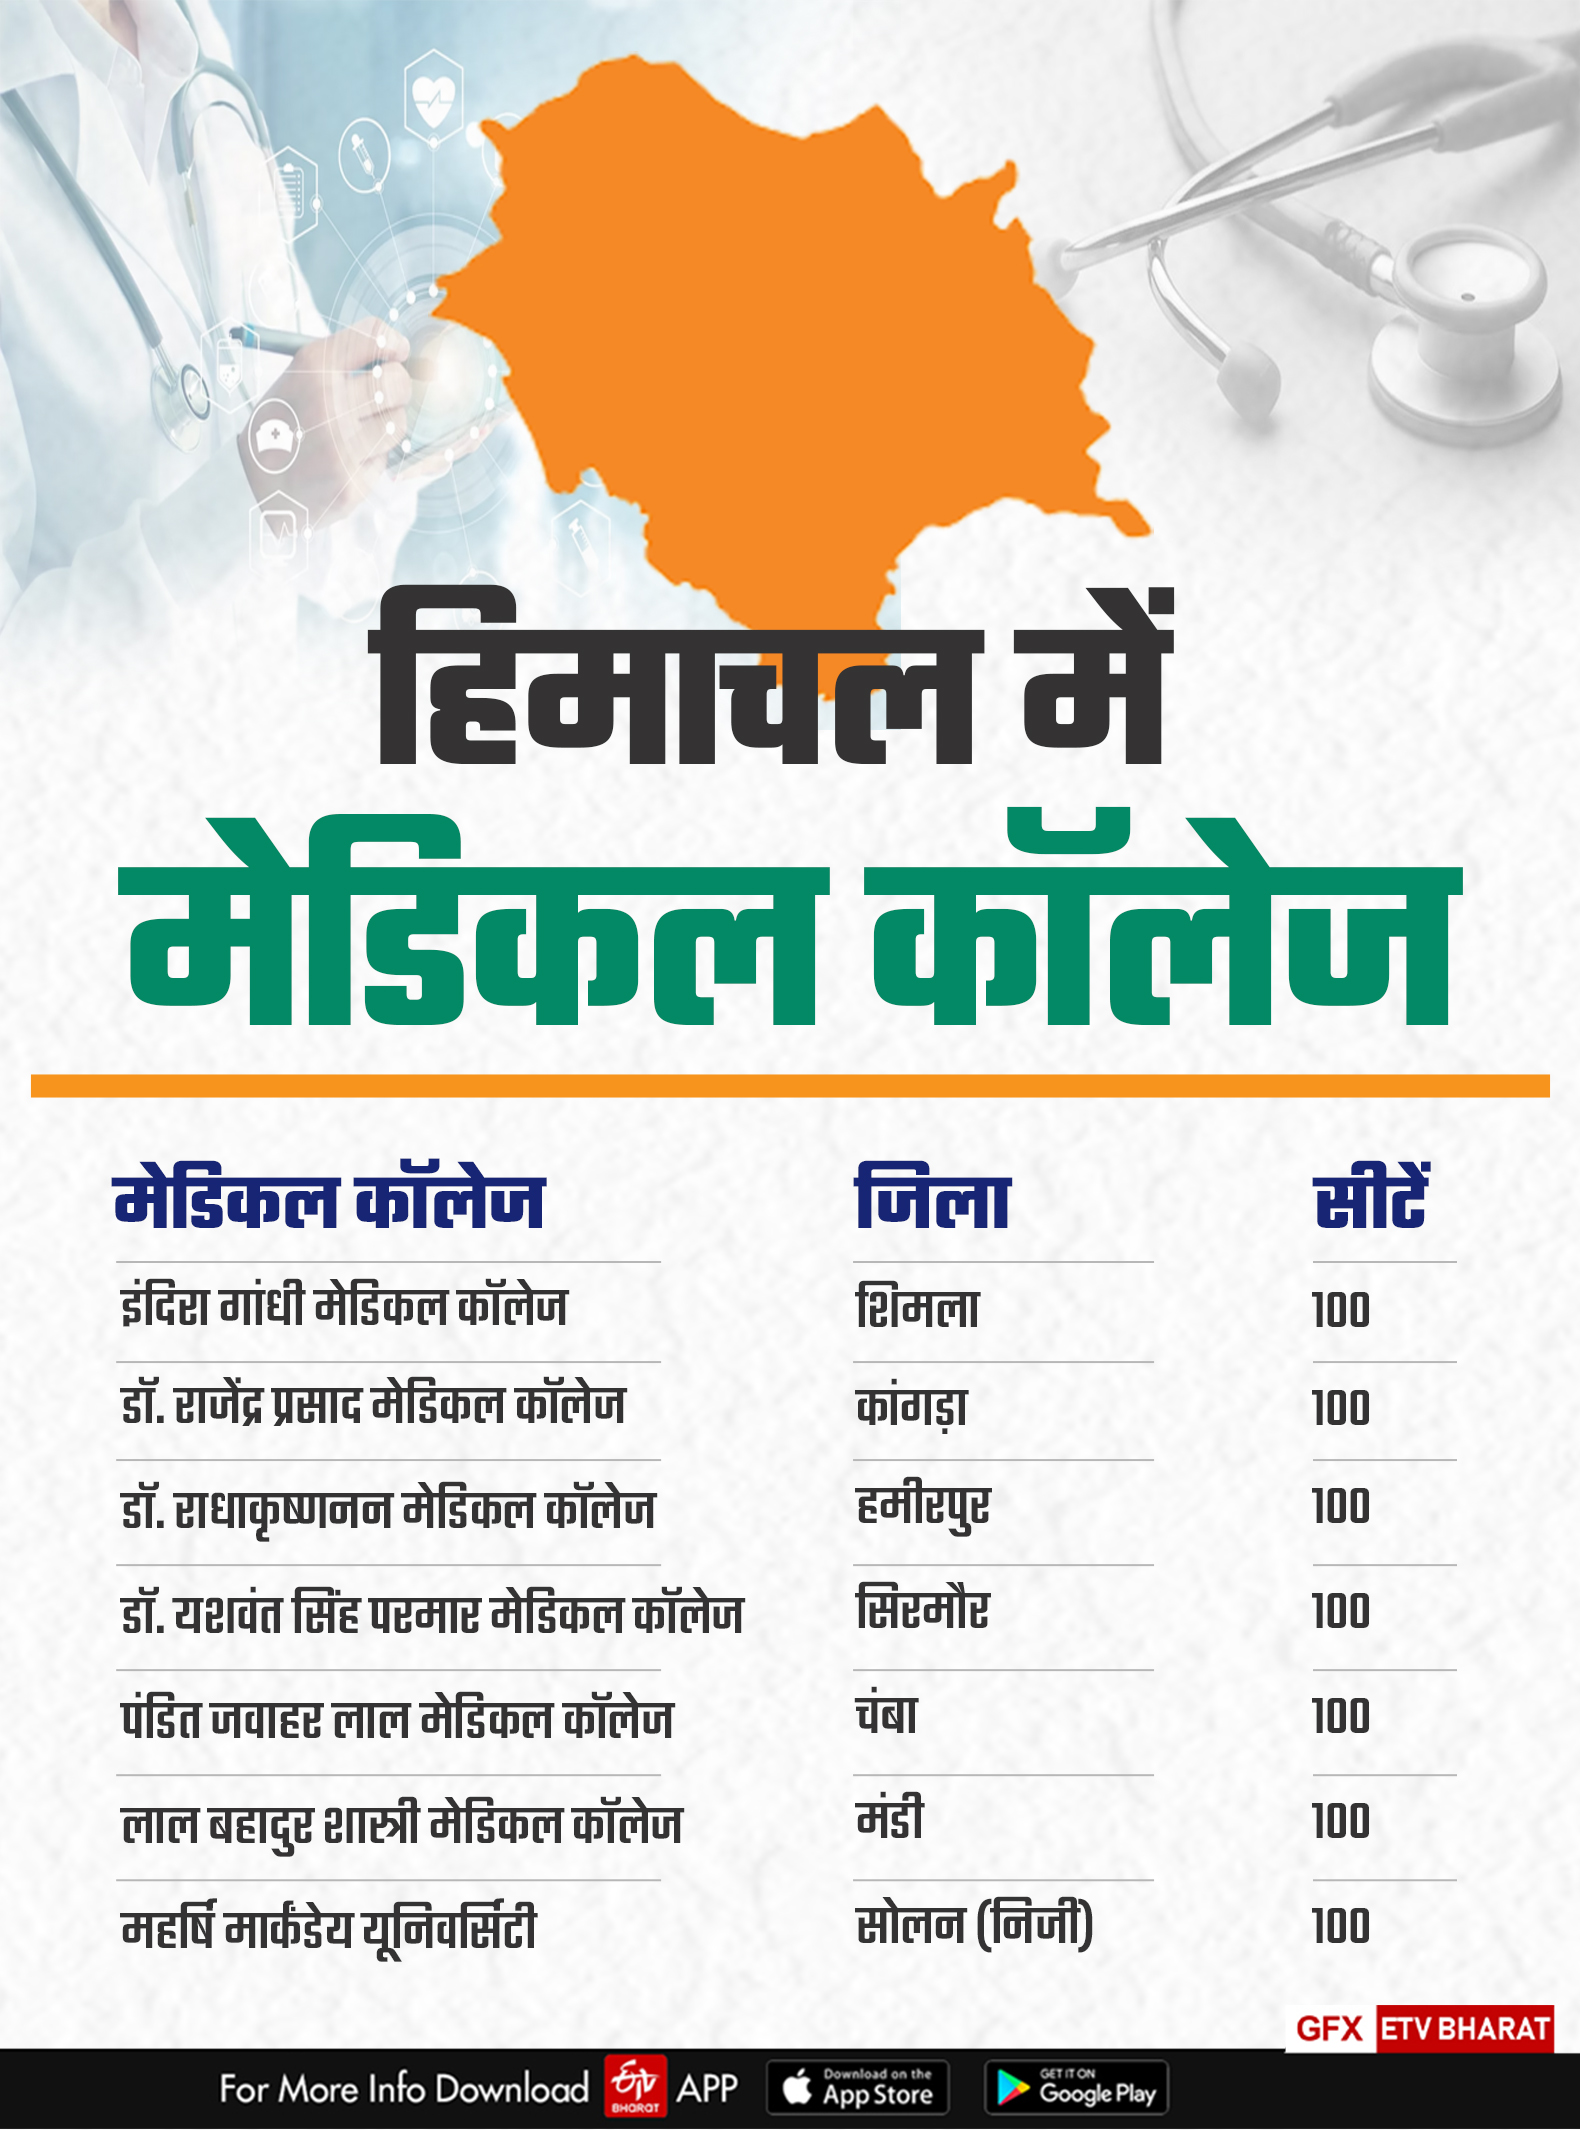 Medical Colleges in Himachal